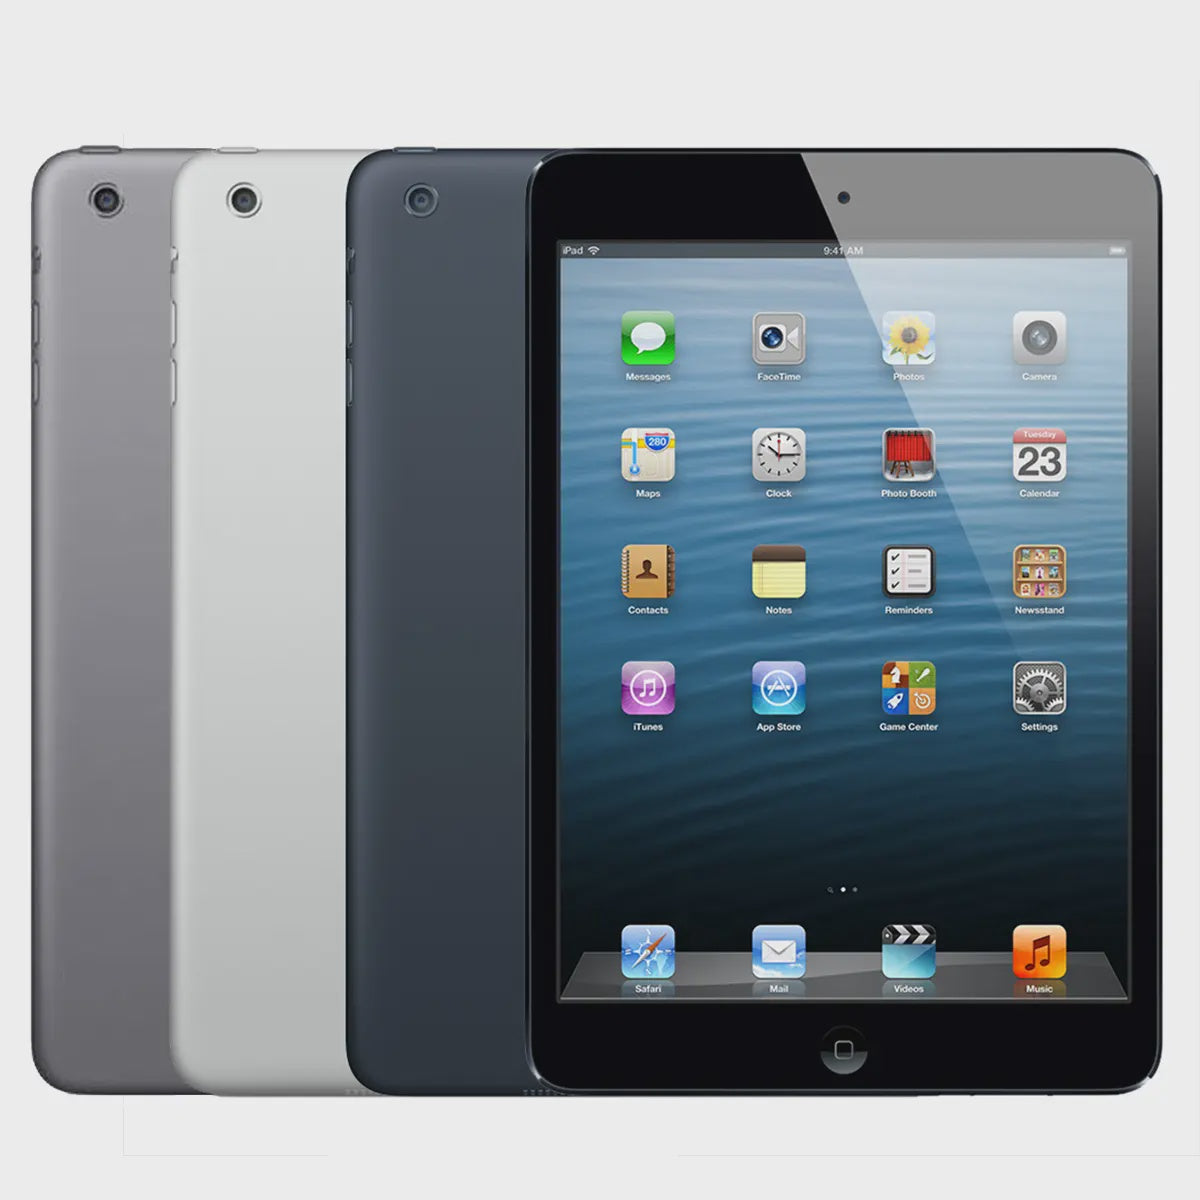 Apple iPad Mini 1 7.9" | A1432 | WiFi